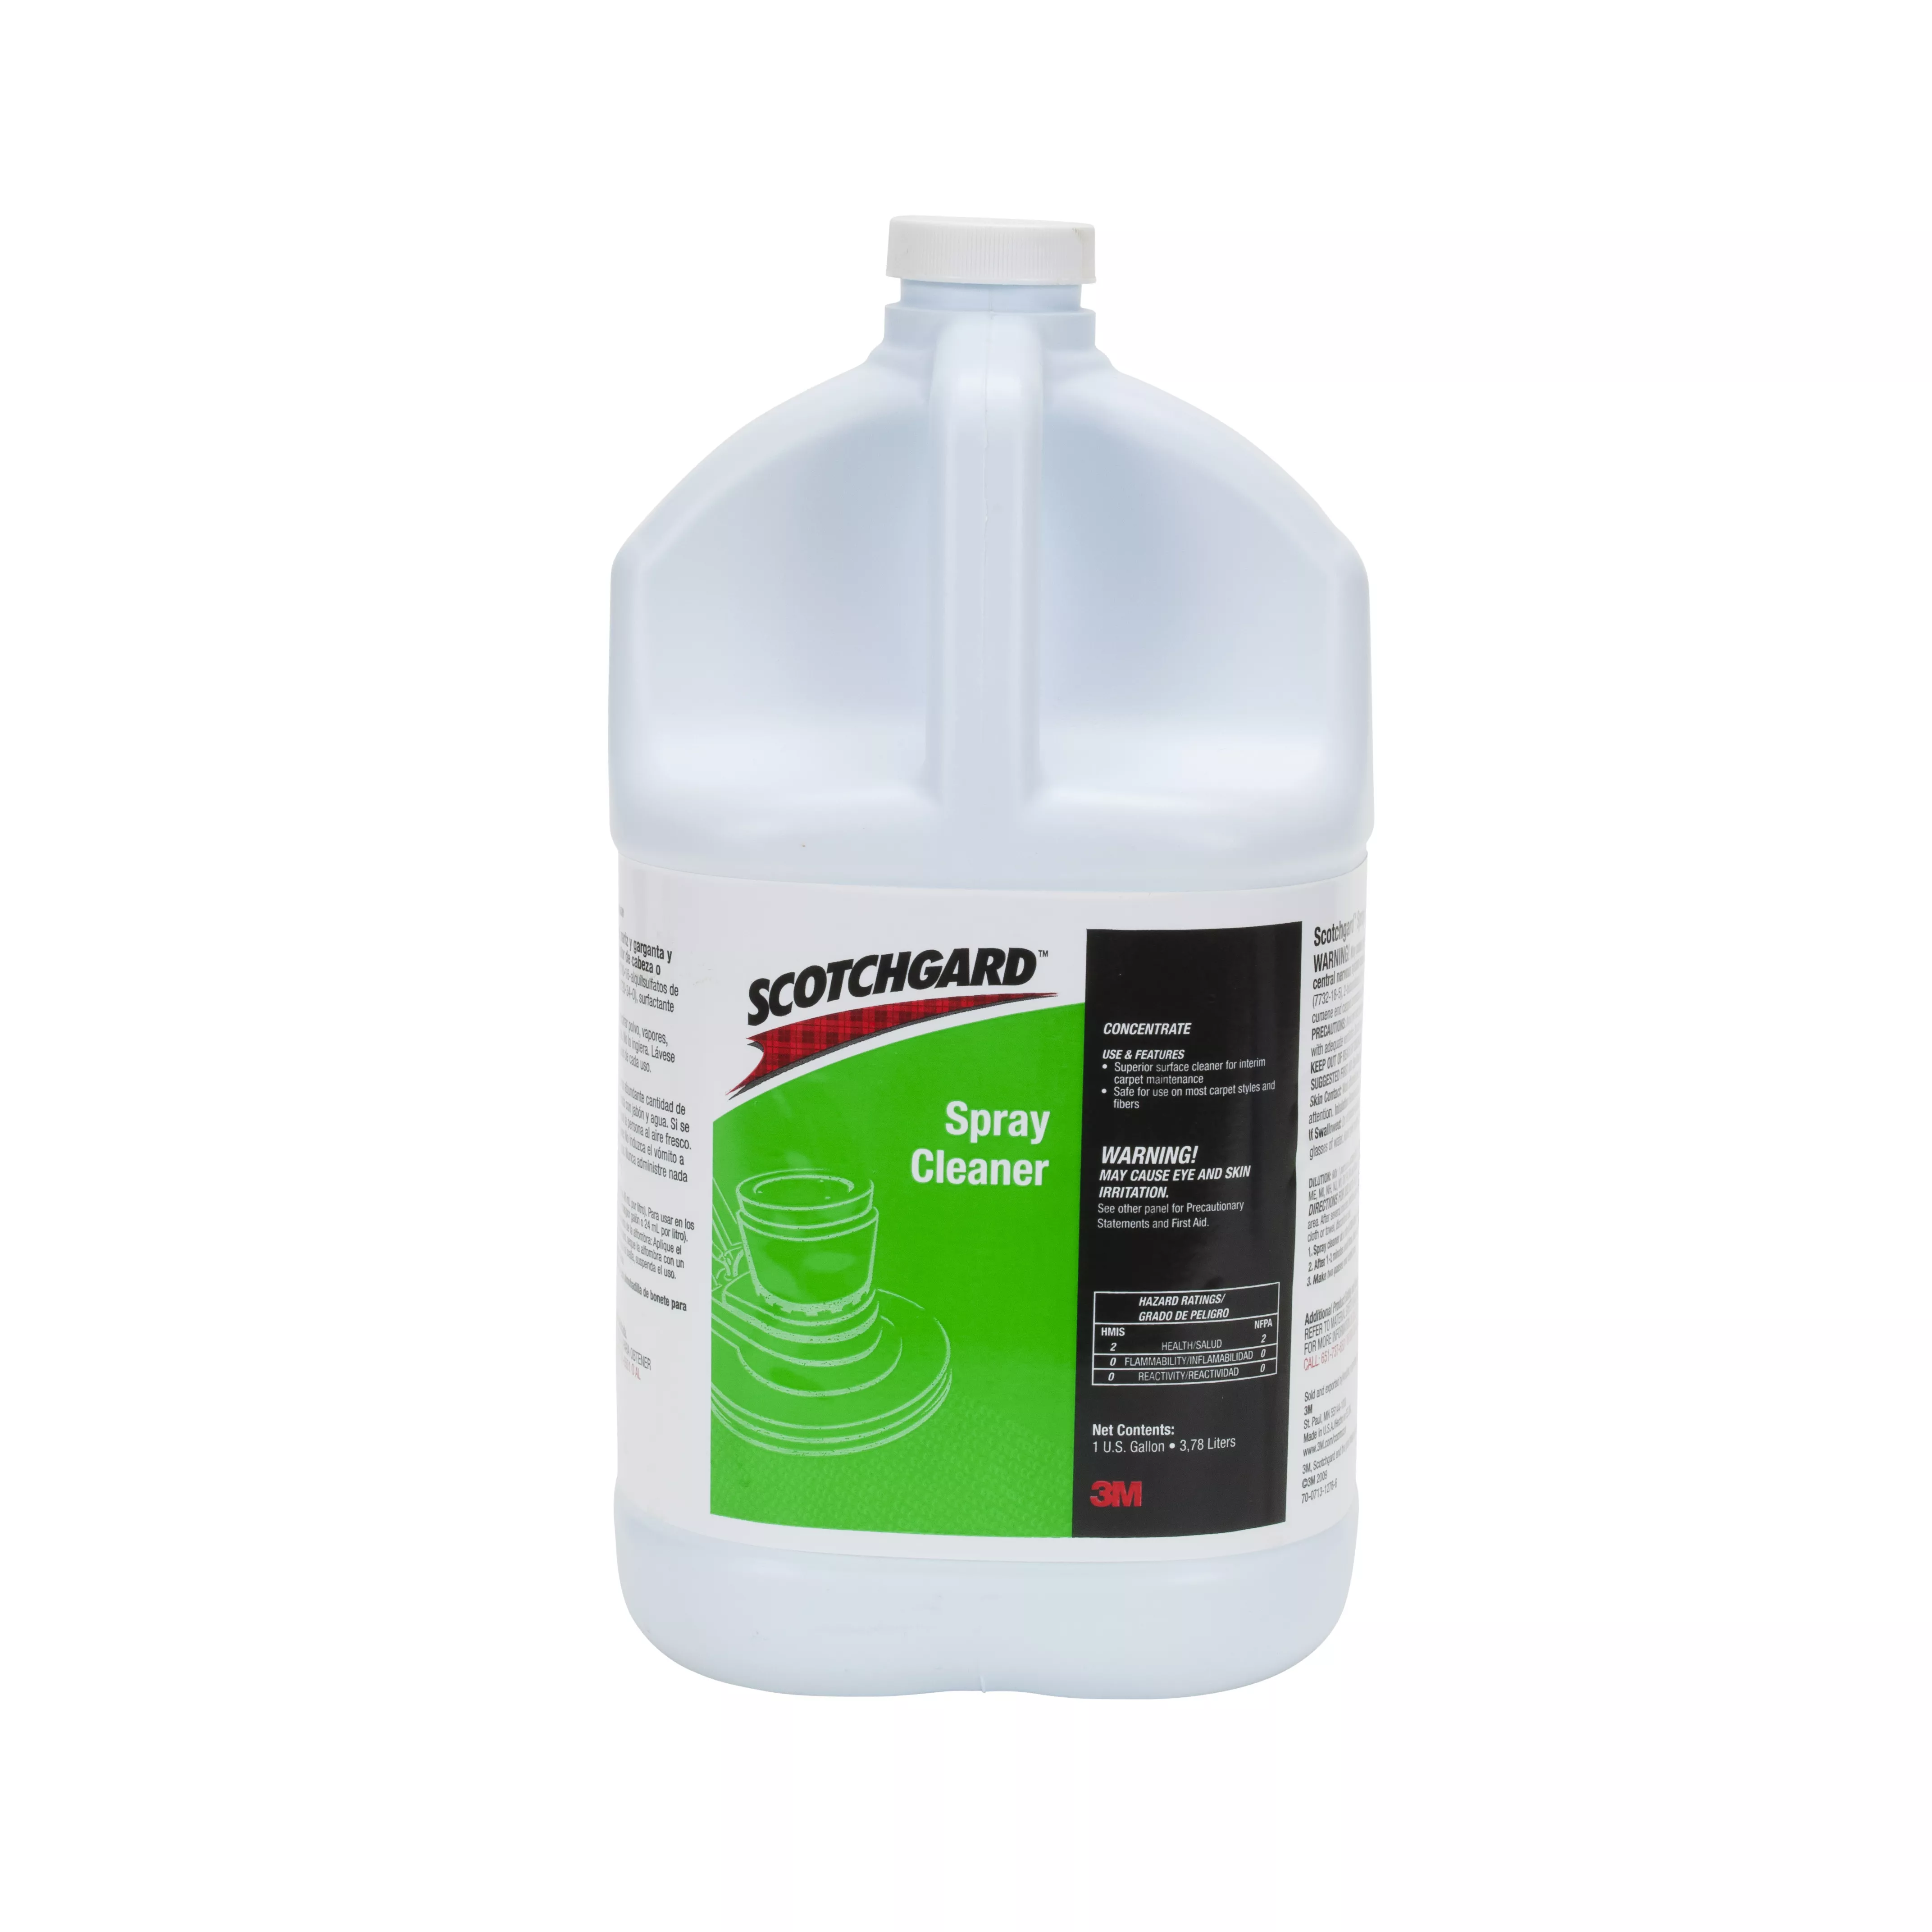 SKU 7000002239 | 3M™ Scotchgard™ Spray Cleaner Concentrate